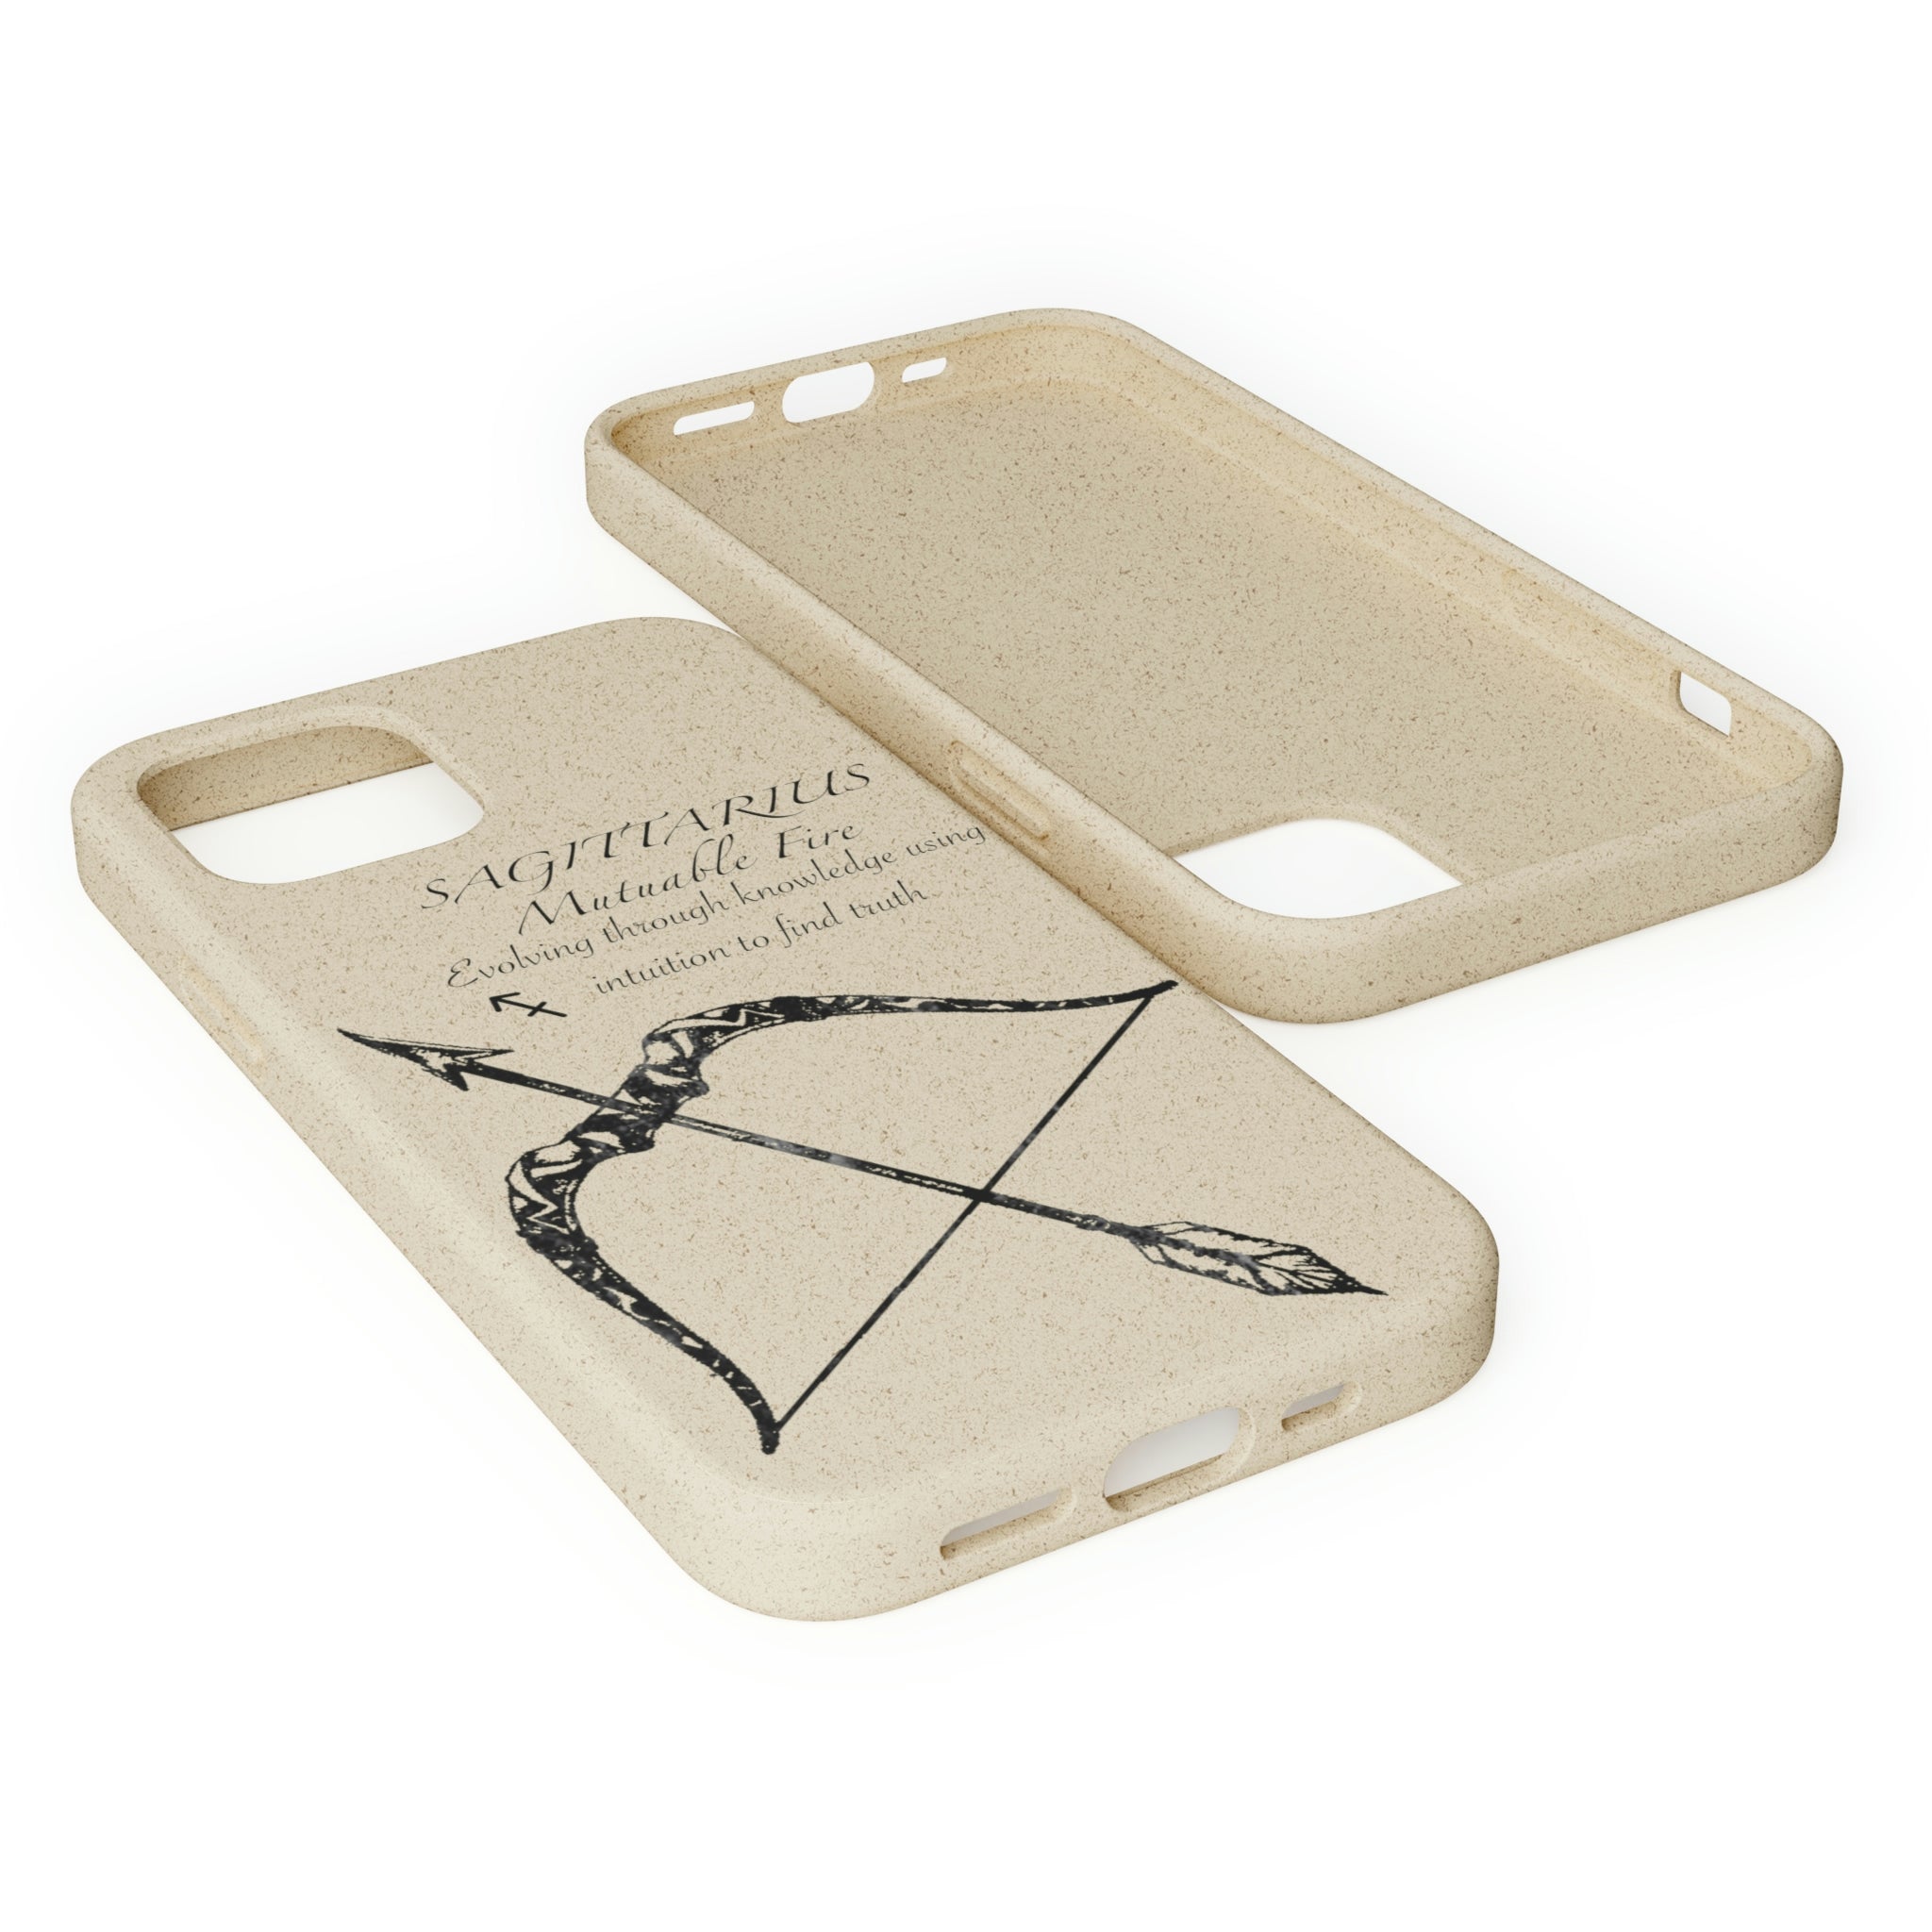 Sagittarius Zodiac Biodegradable Phone Case Printify